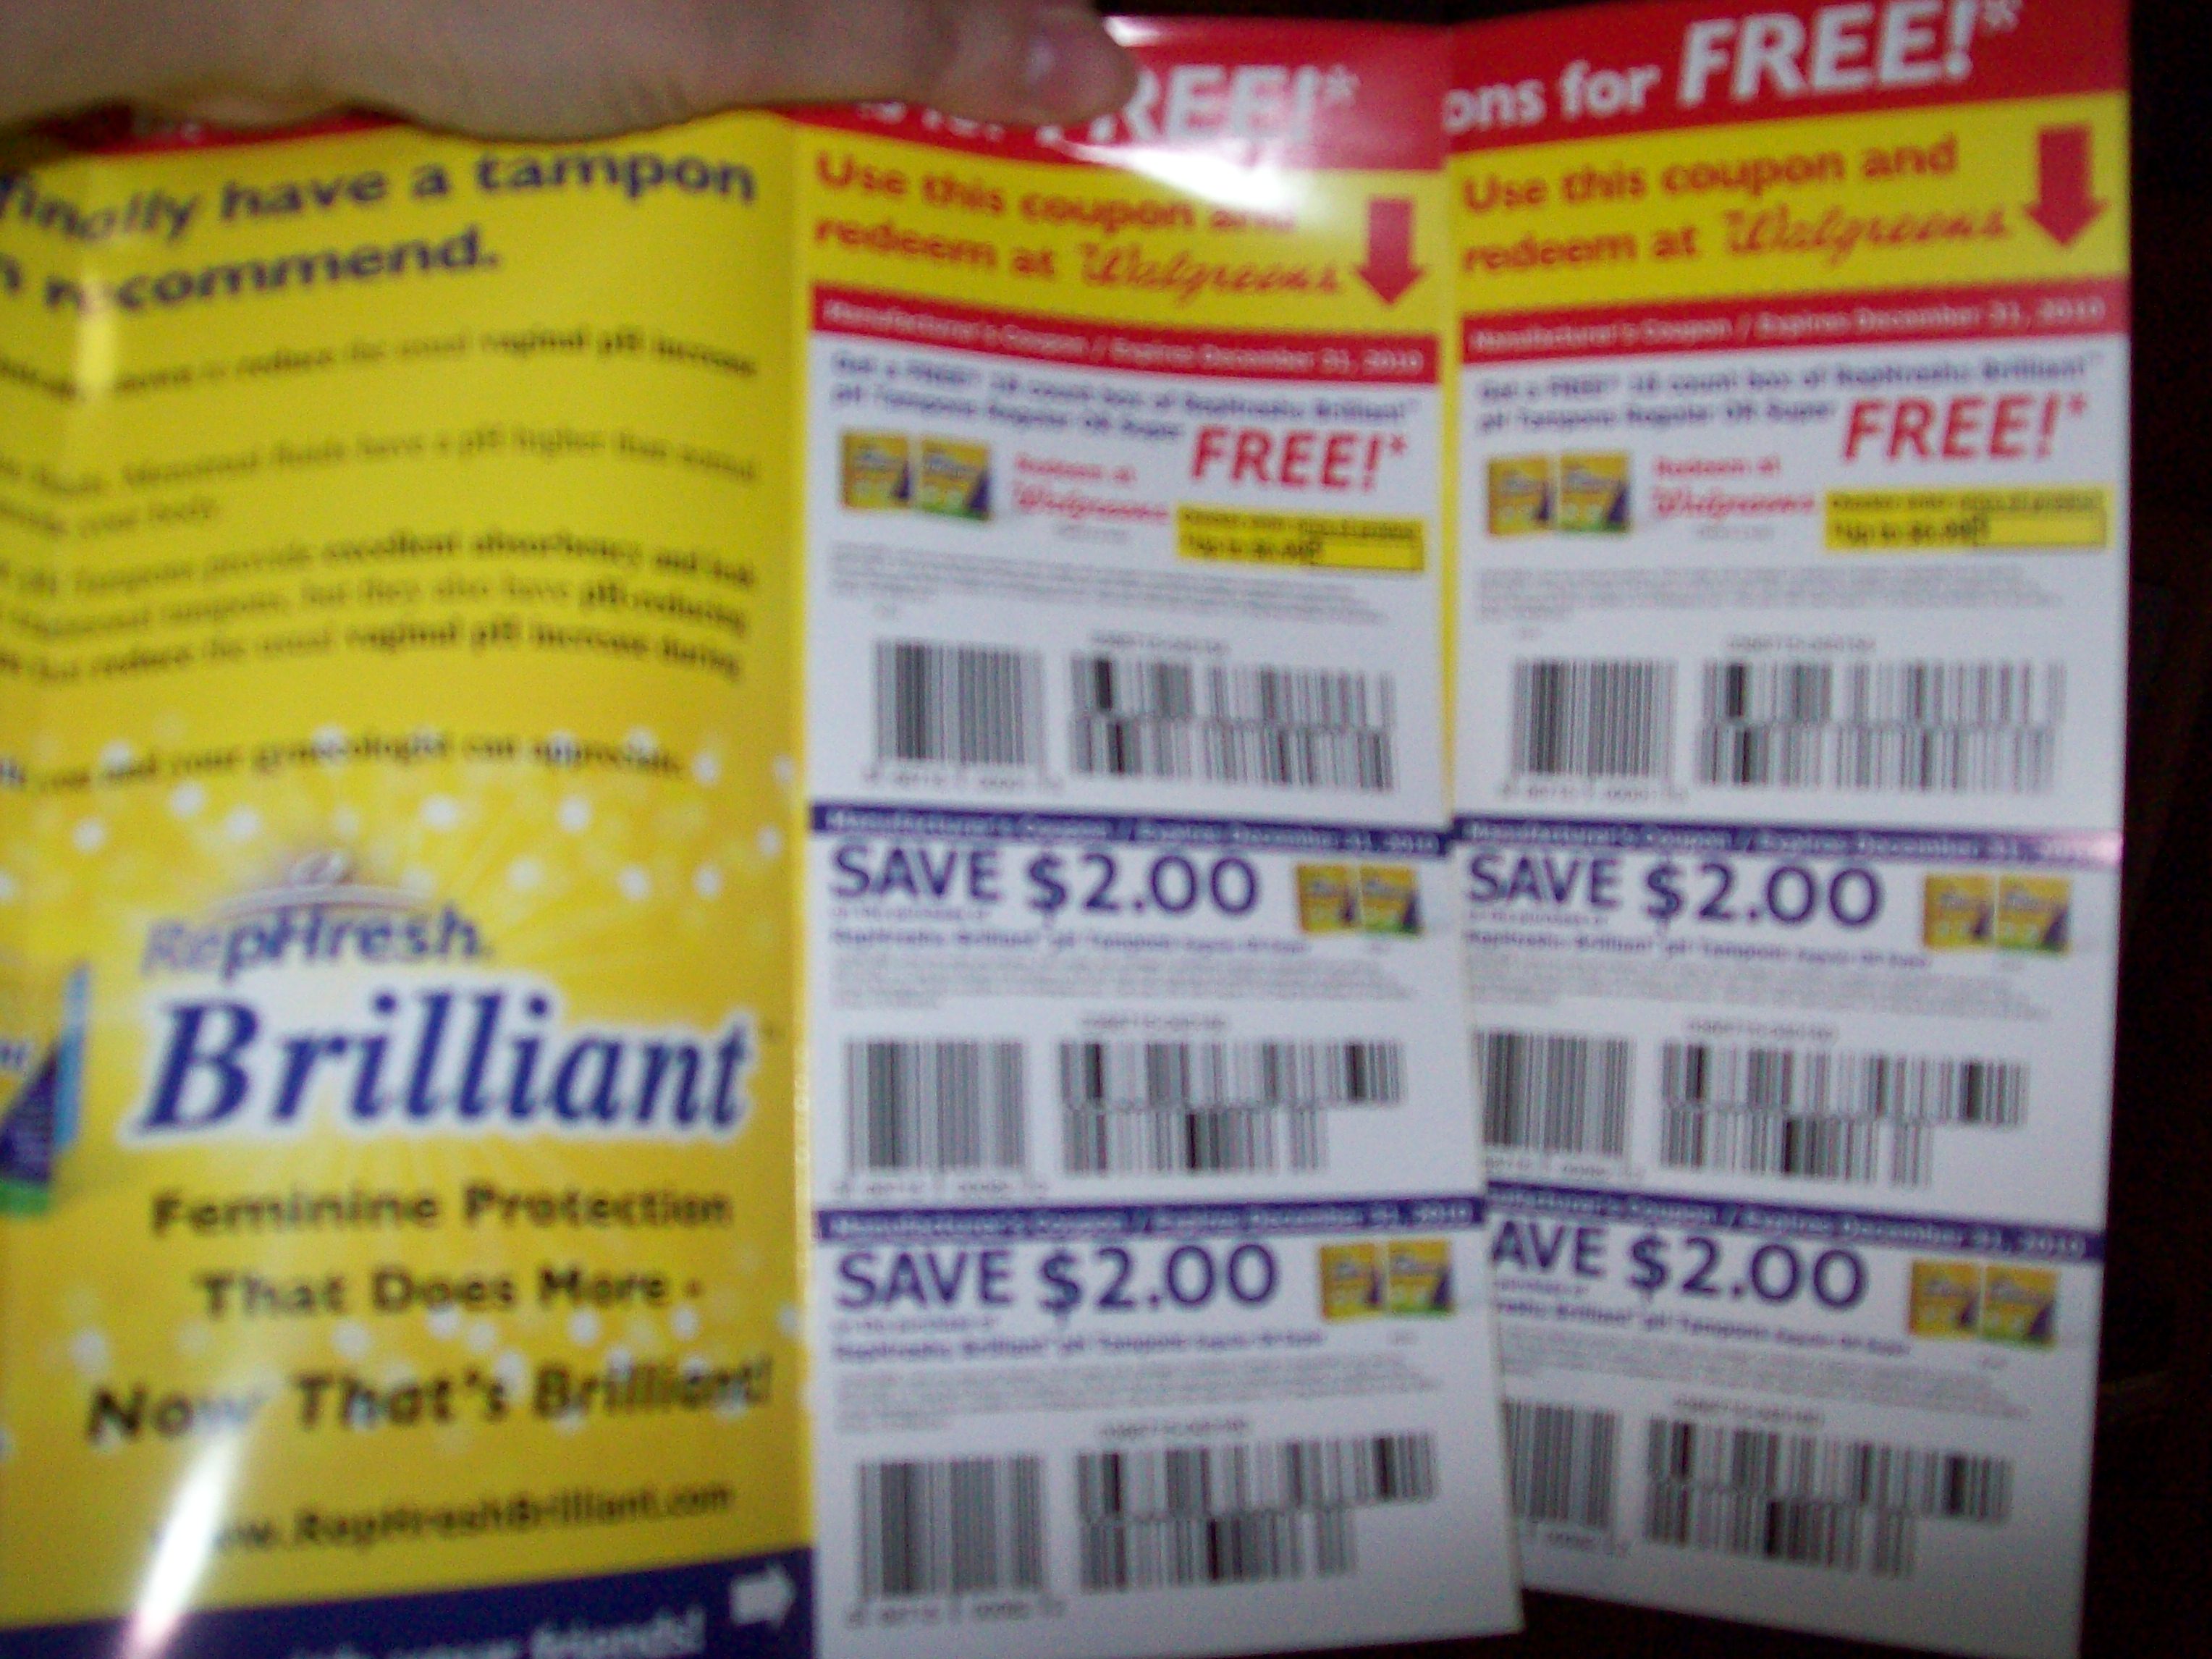 Free RePhresh brilliant tampons coupon